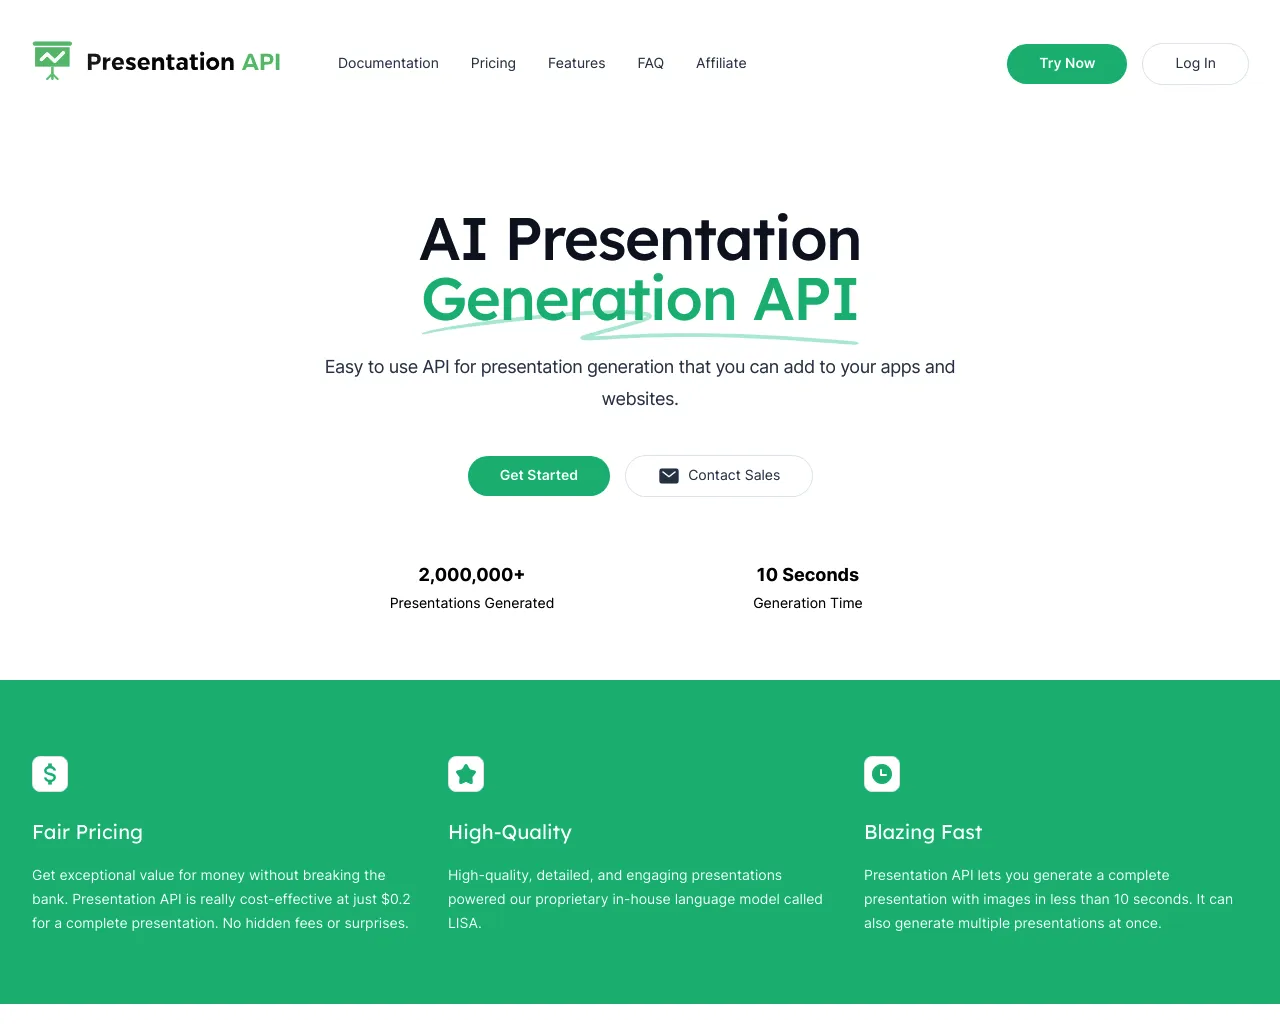 Presentation API is an easy-to-use API for presentation generation